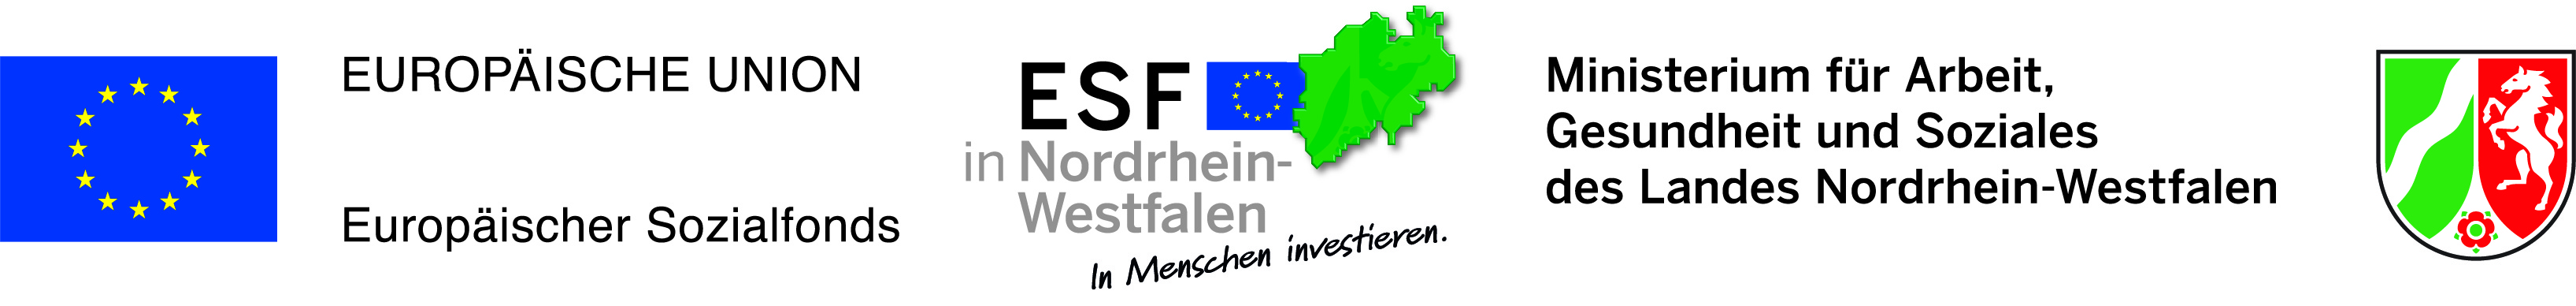 eu_esf-nrw_mags_4c-logo